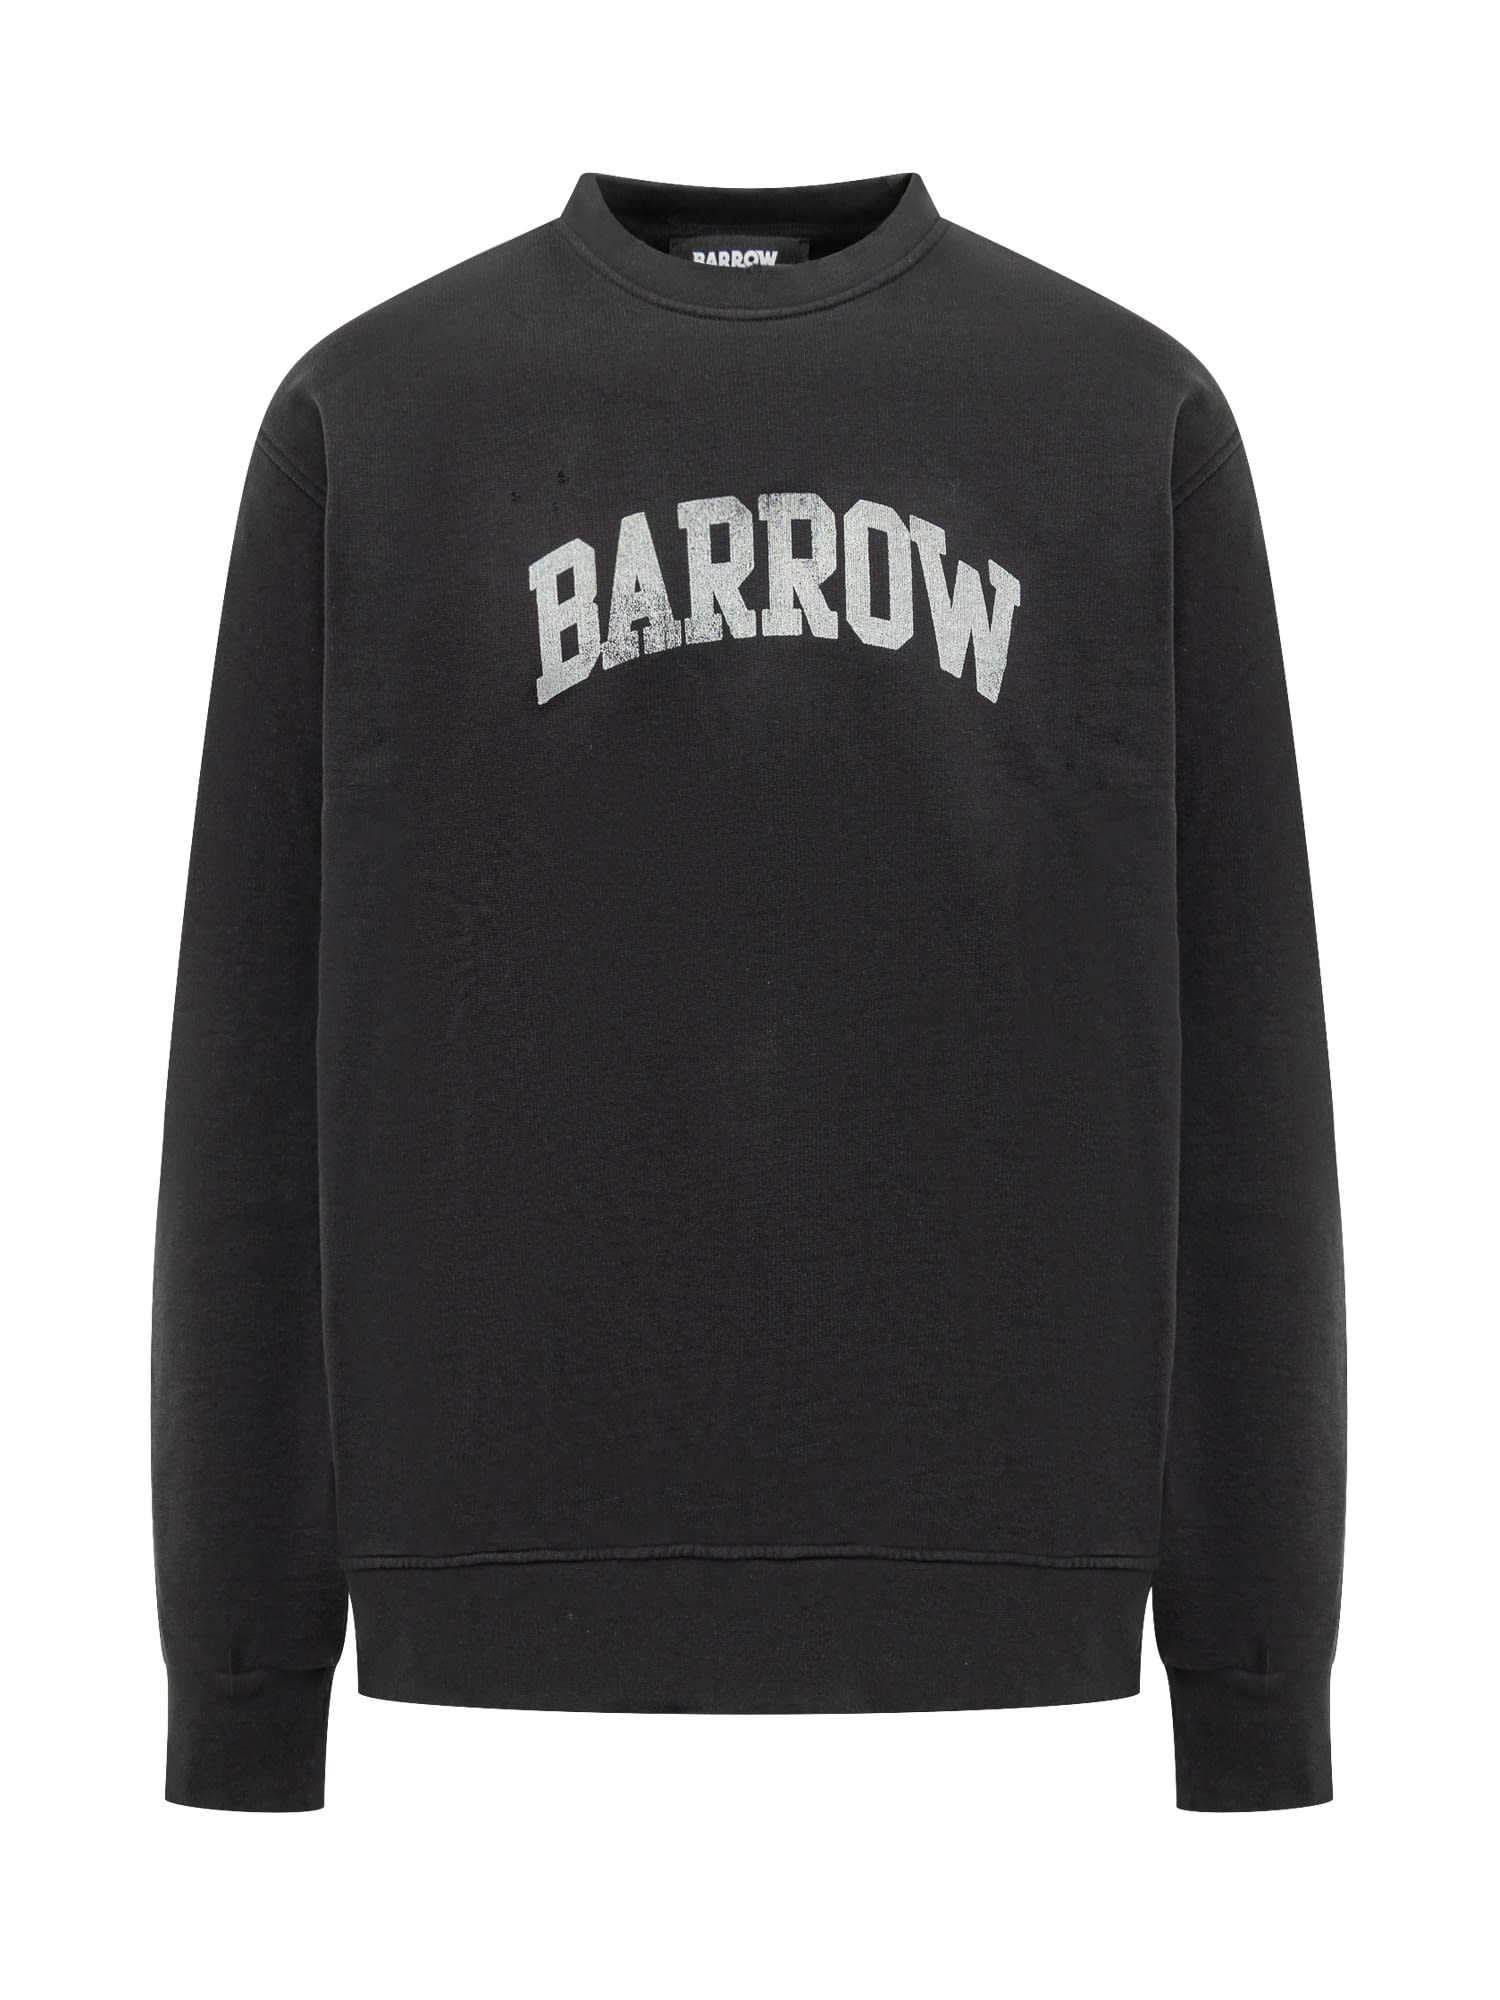 Barrow Barow Sweatshirt In Nero/black